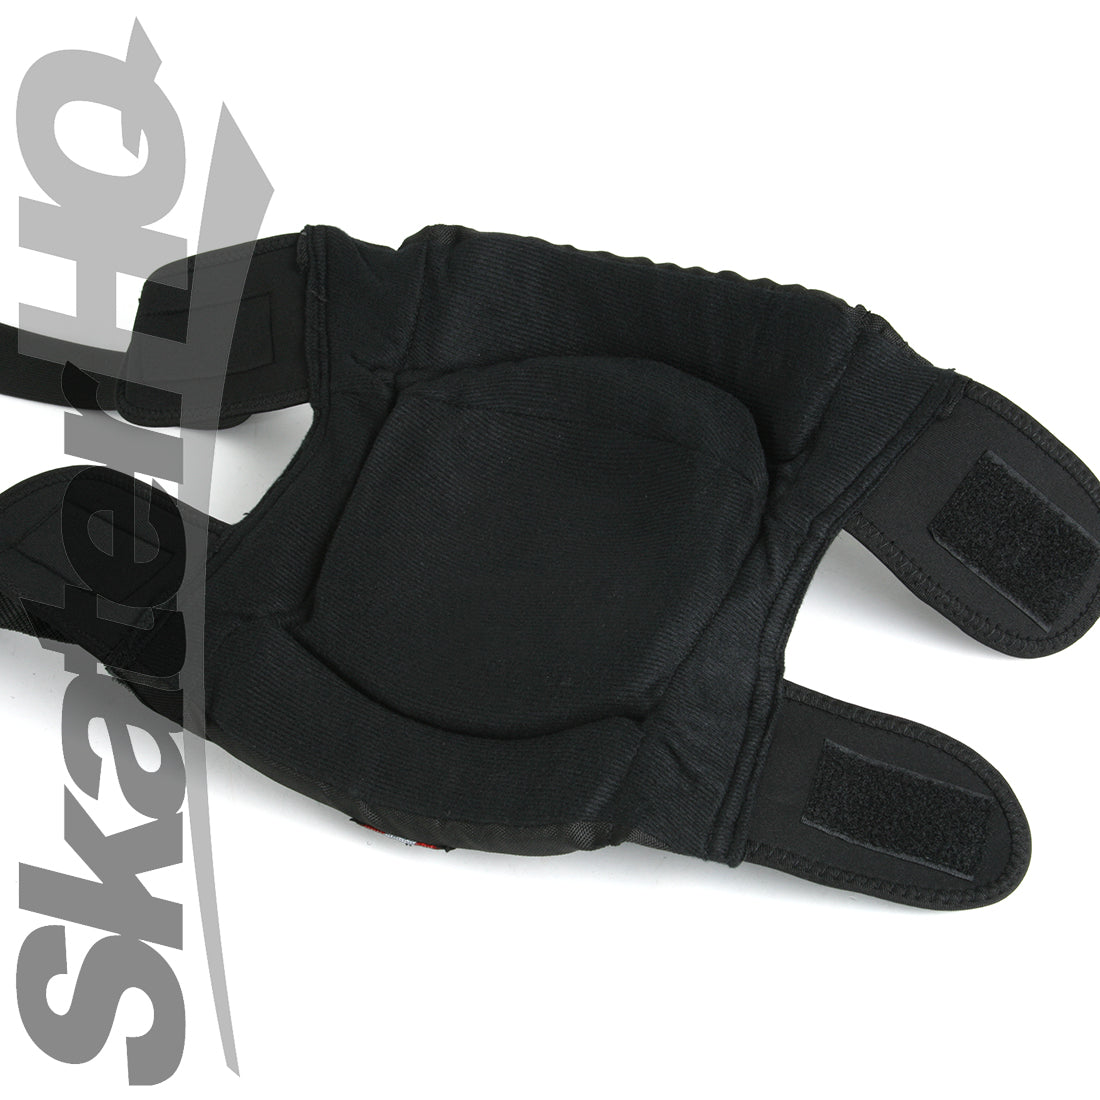 Triple 8 Park Knee/Elbow Set Protective Gear